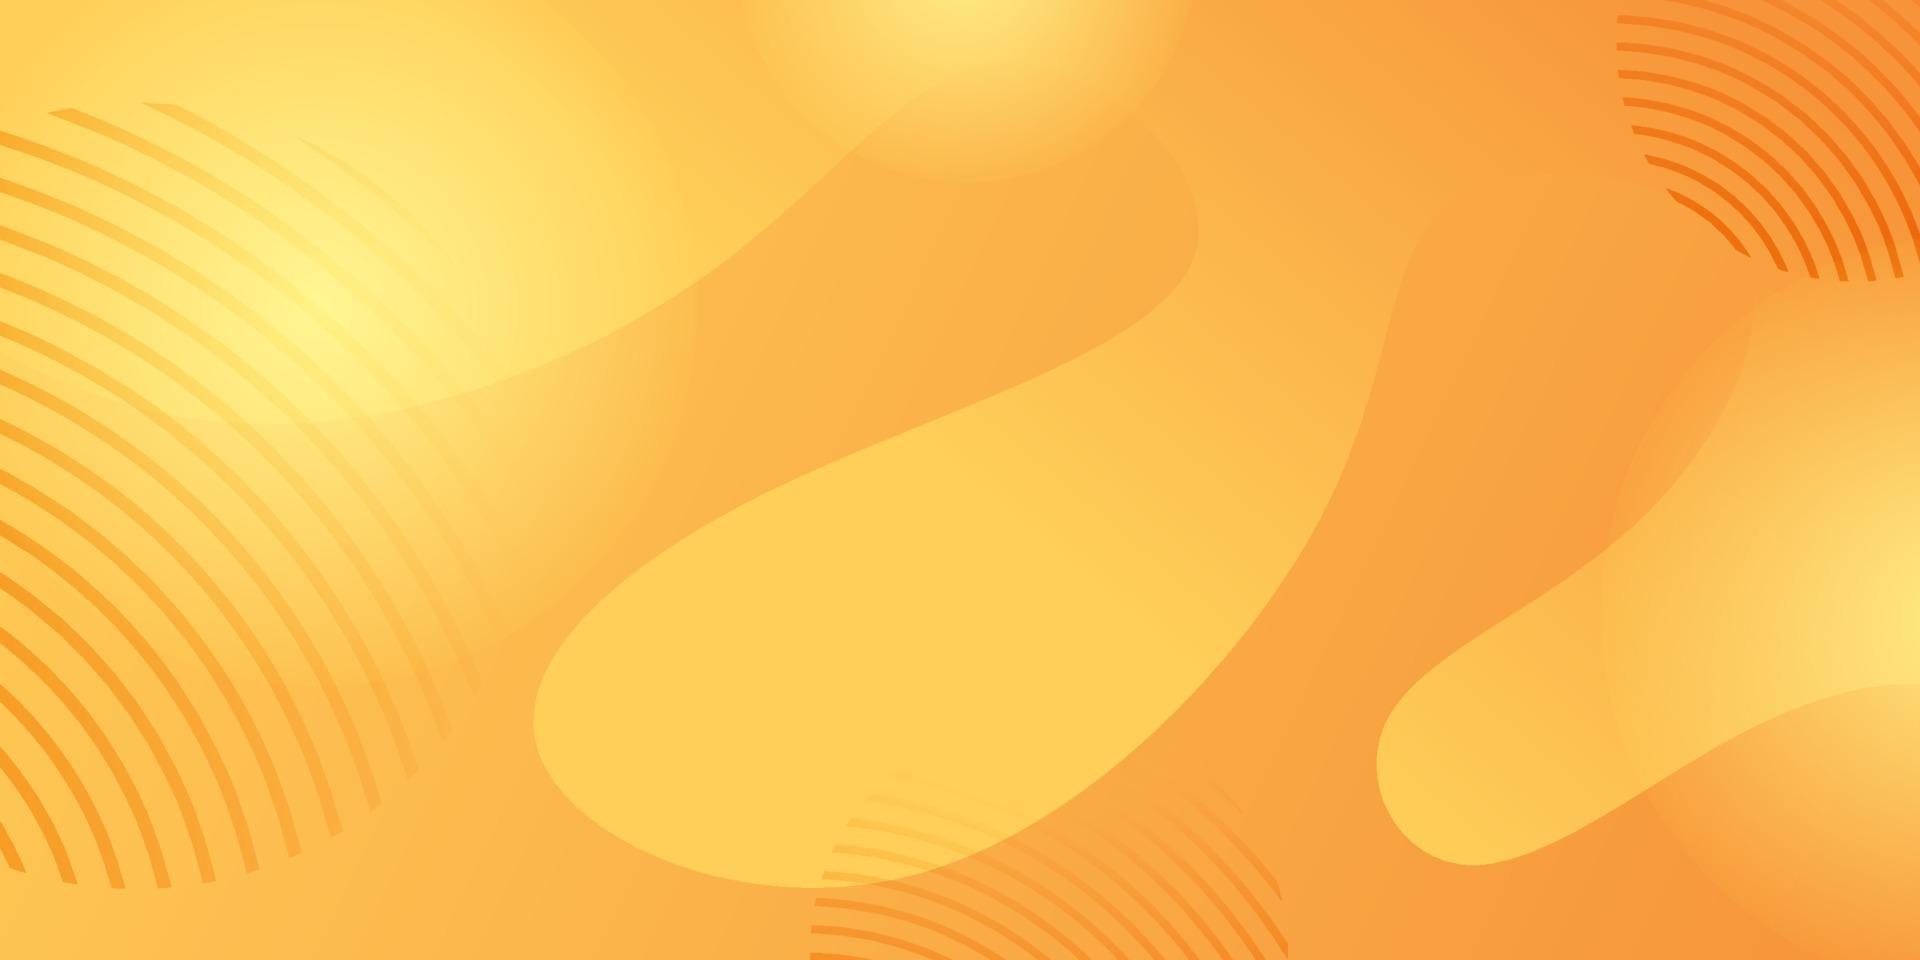 moderno gradiente de forma geométrica com elemento dinâmico na cor laranja vetor